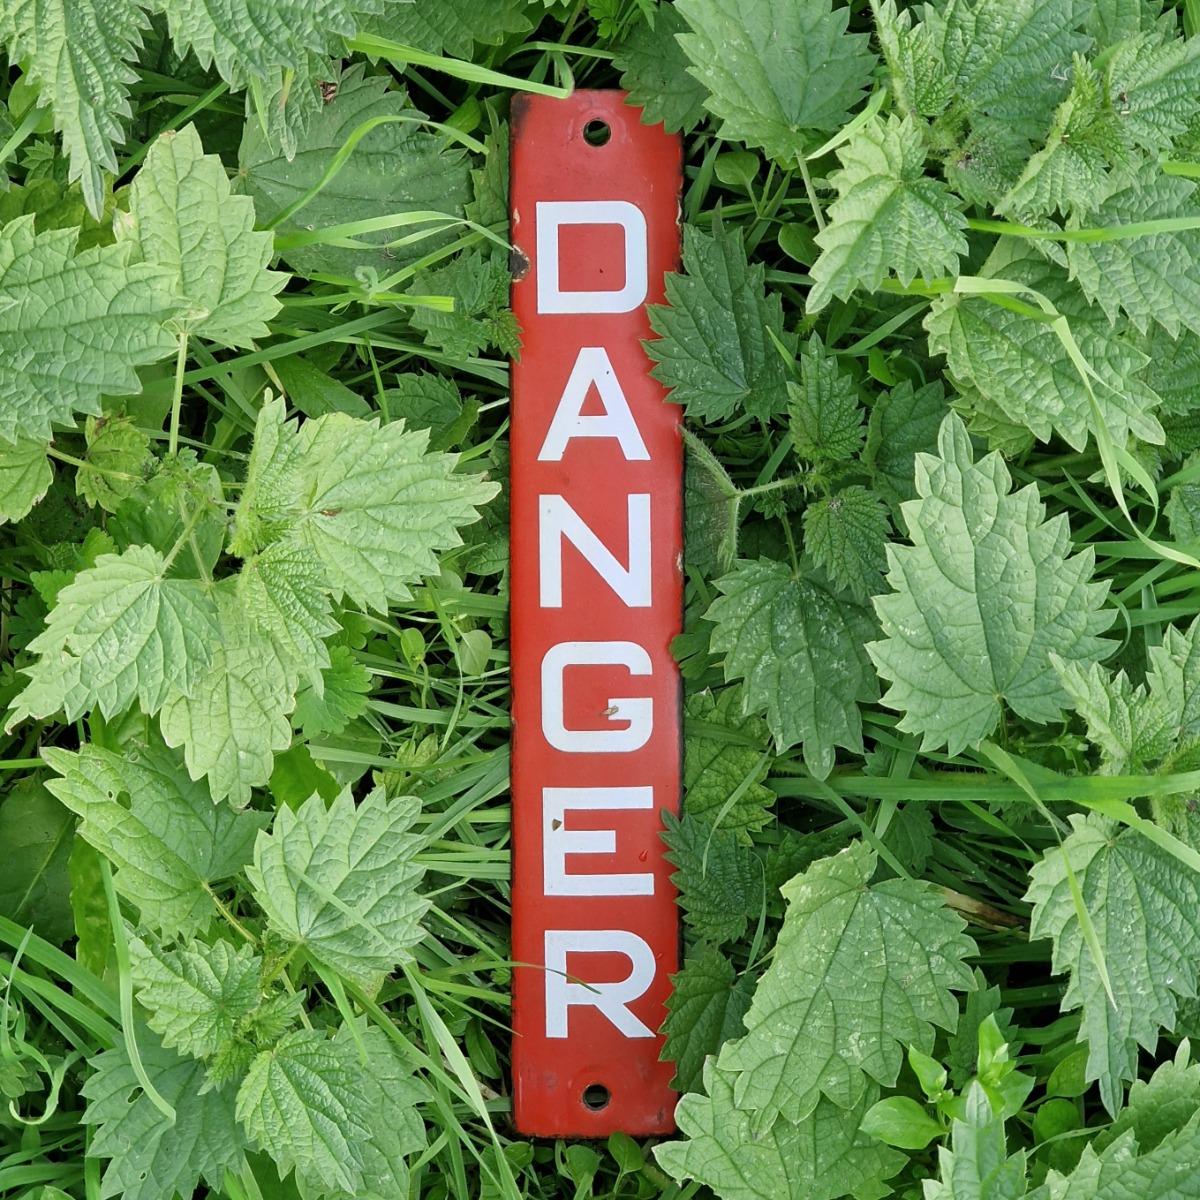 6 enameled DANGER signs